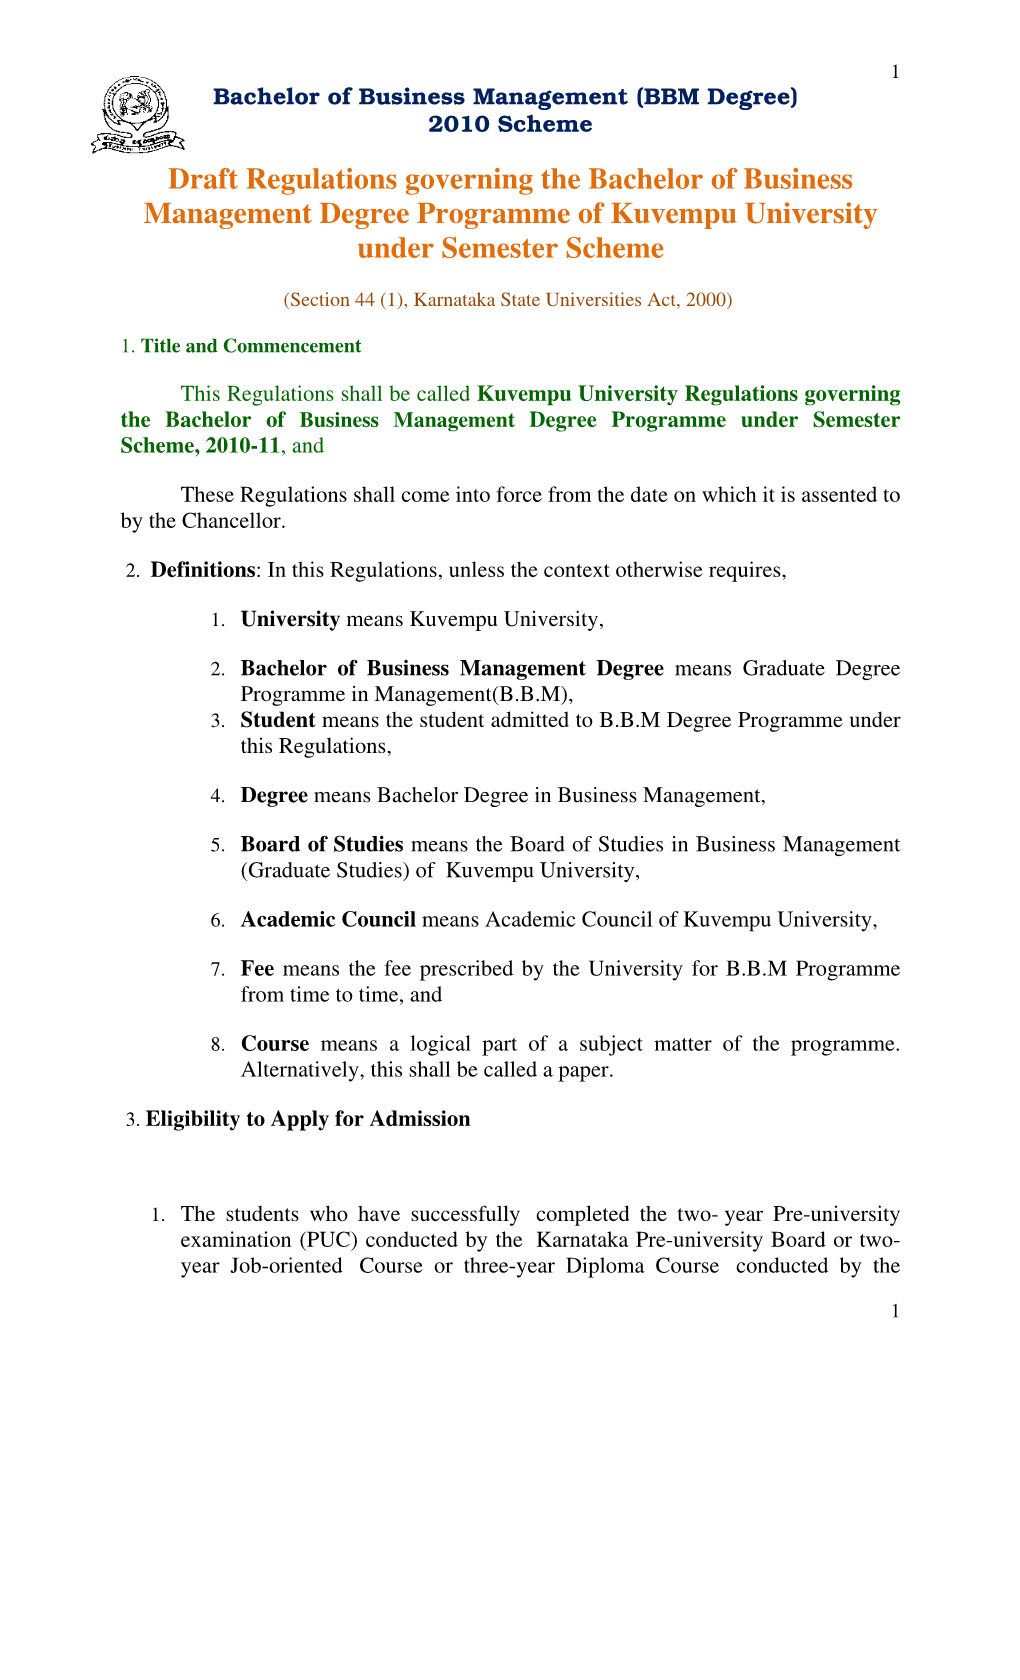 Draft Regulations Governing the Bachelor of Business Management Degree Programme of Kuvempu University Under Semester Scheme